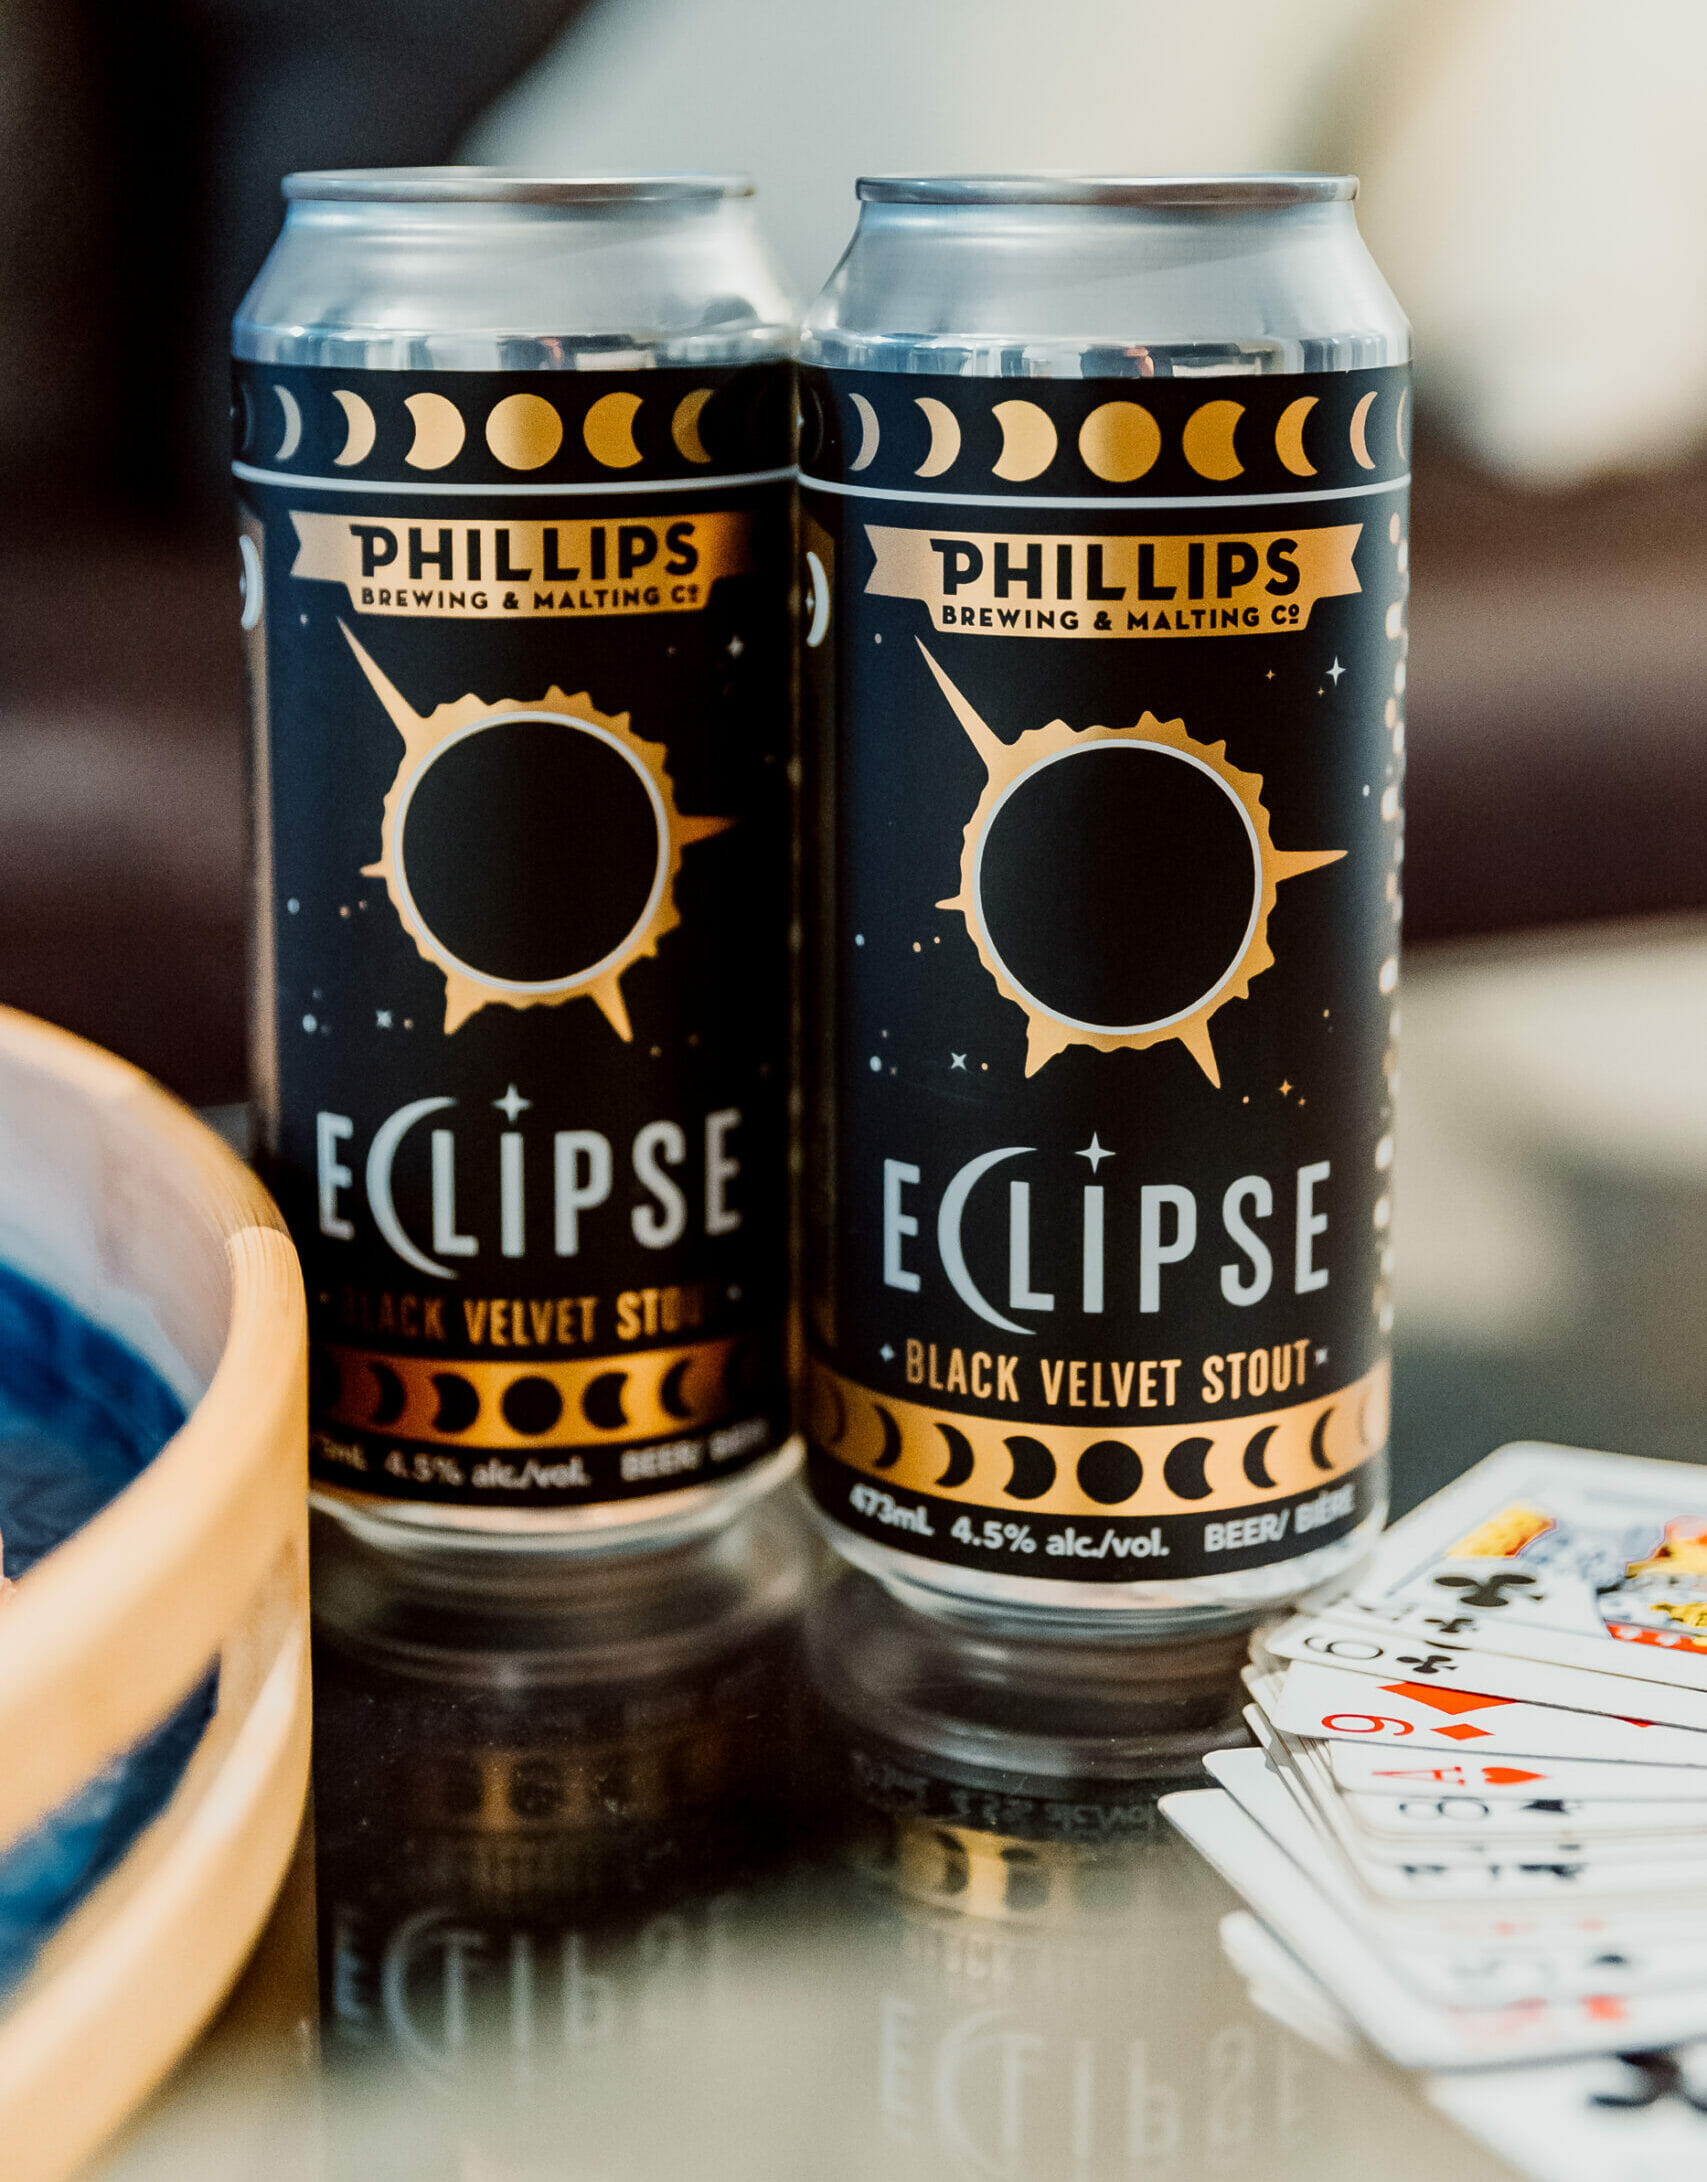 Eclipse Black Velvet - from Phillips Brewing